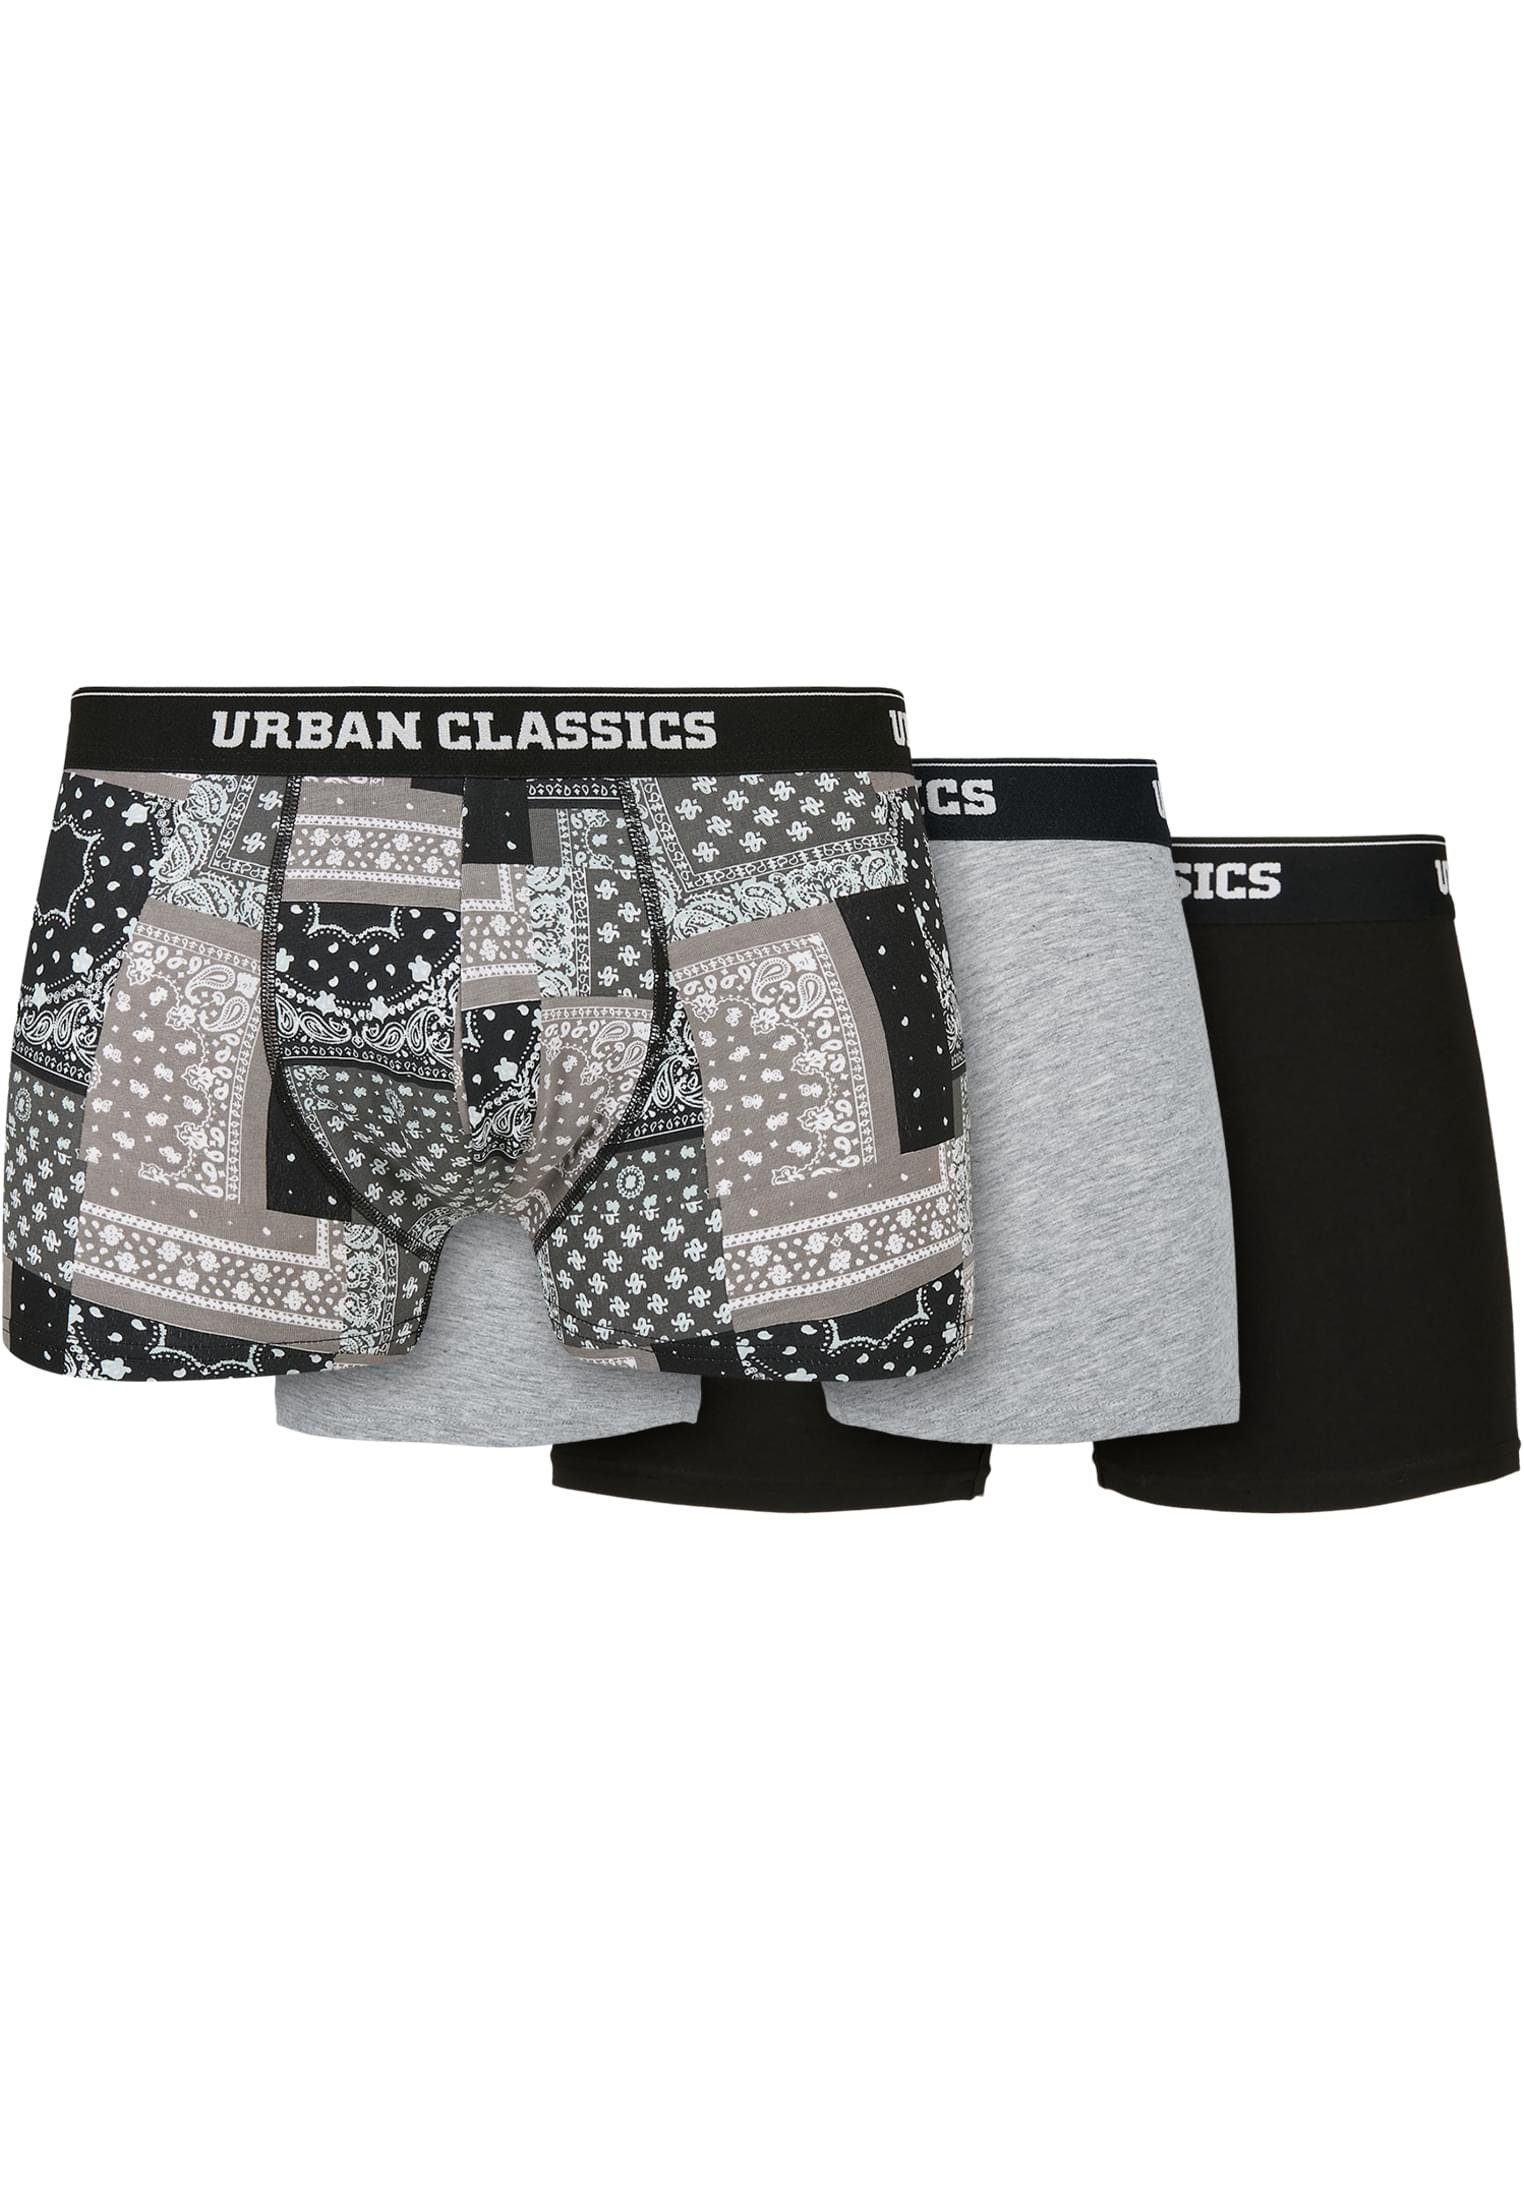 URBAN CLASSICS (1-St) Organic black grey bandana Shorts Boxer grey 3-Pack Boxershorts Herren